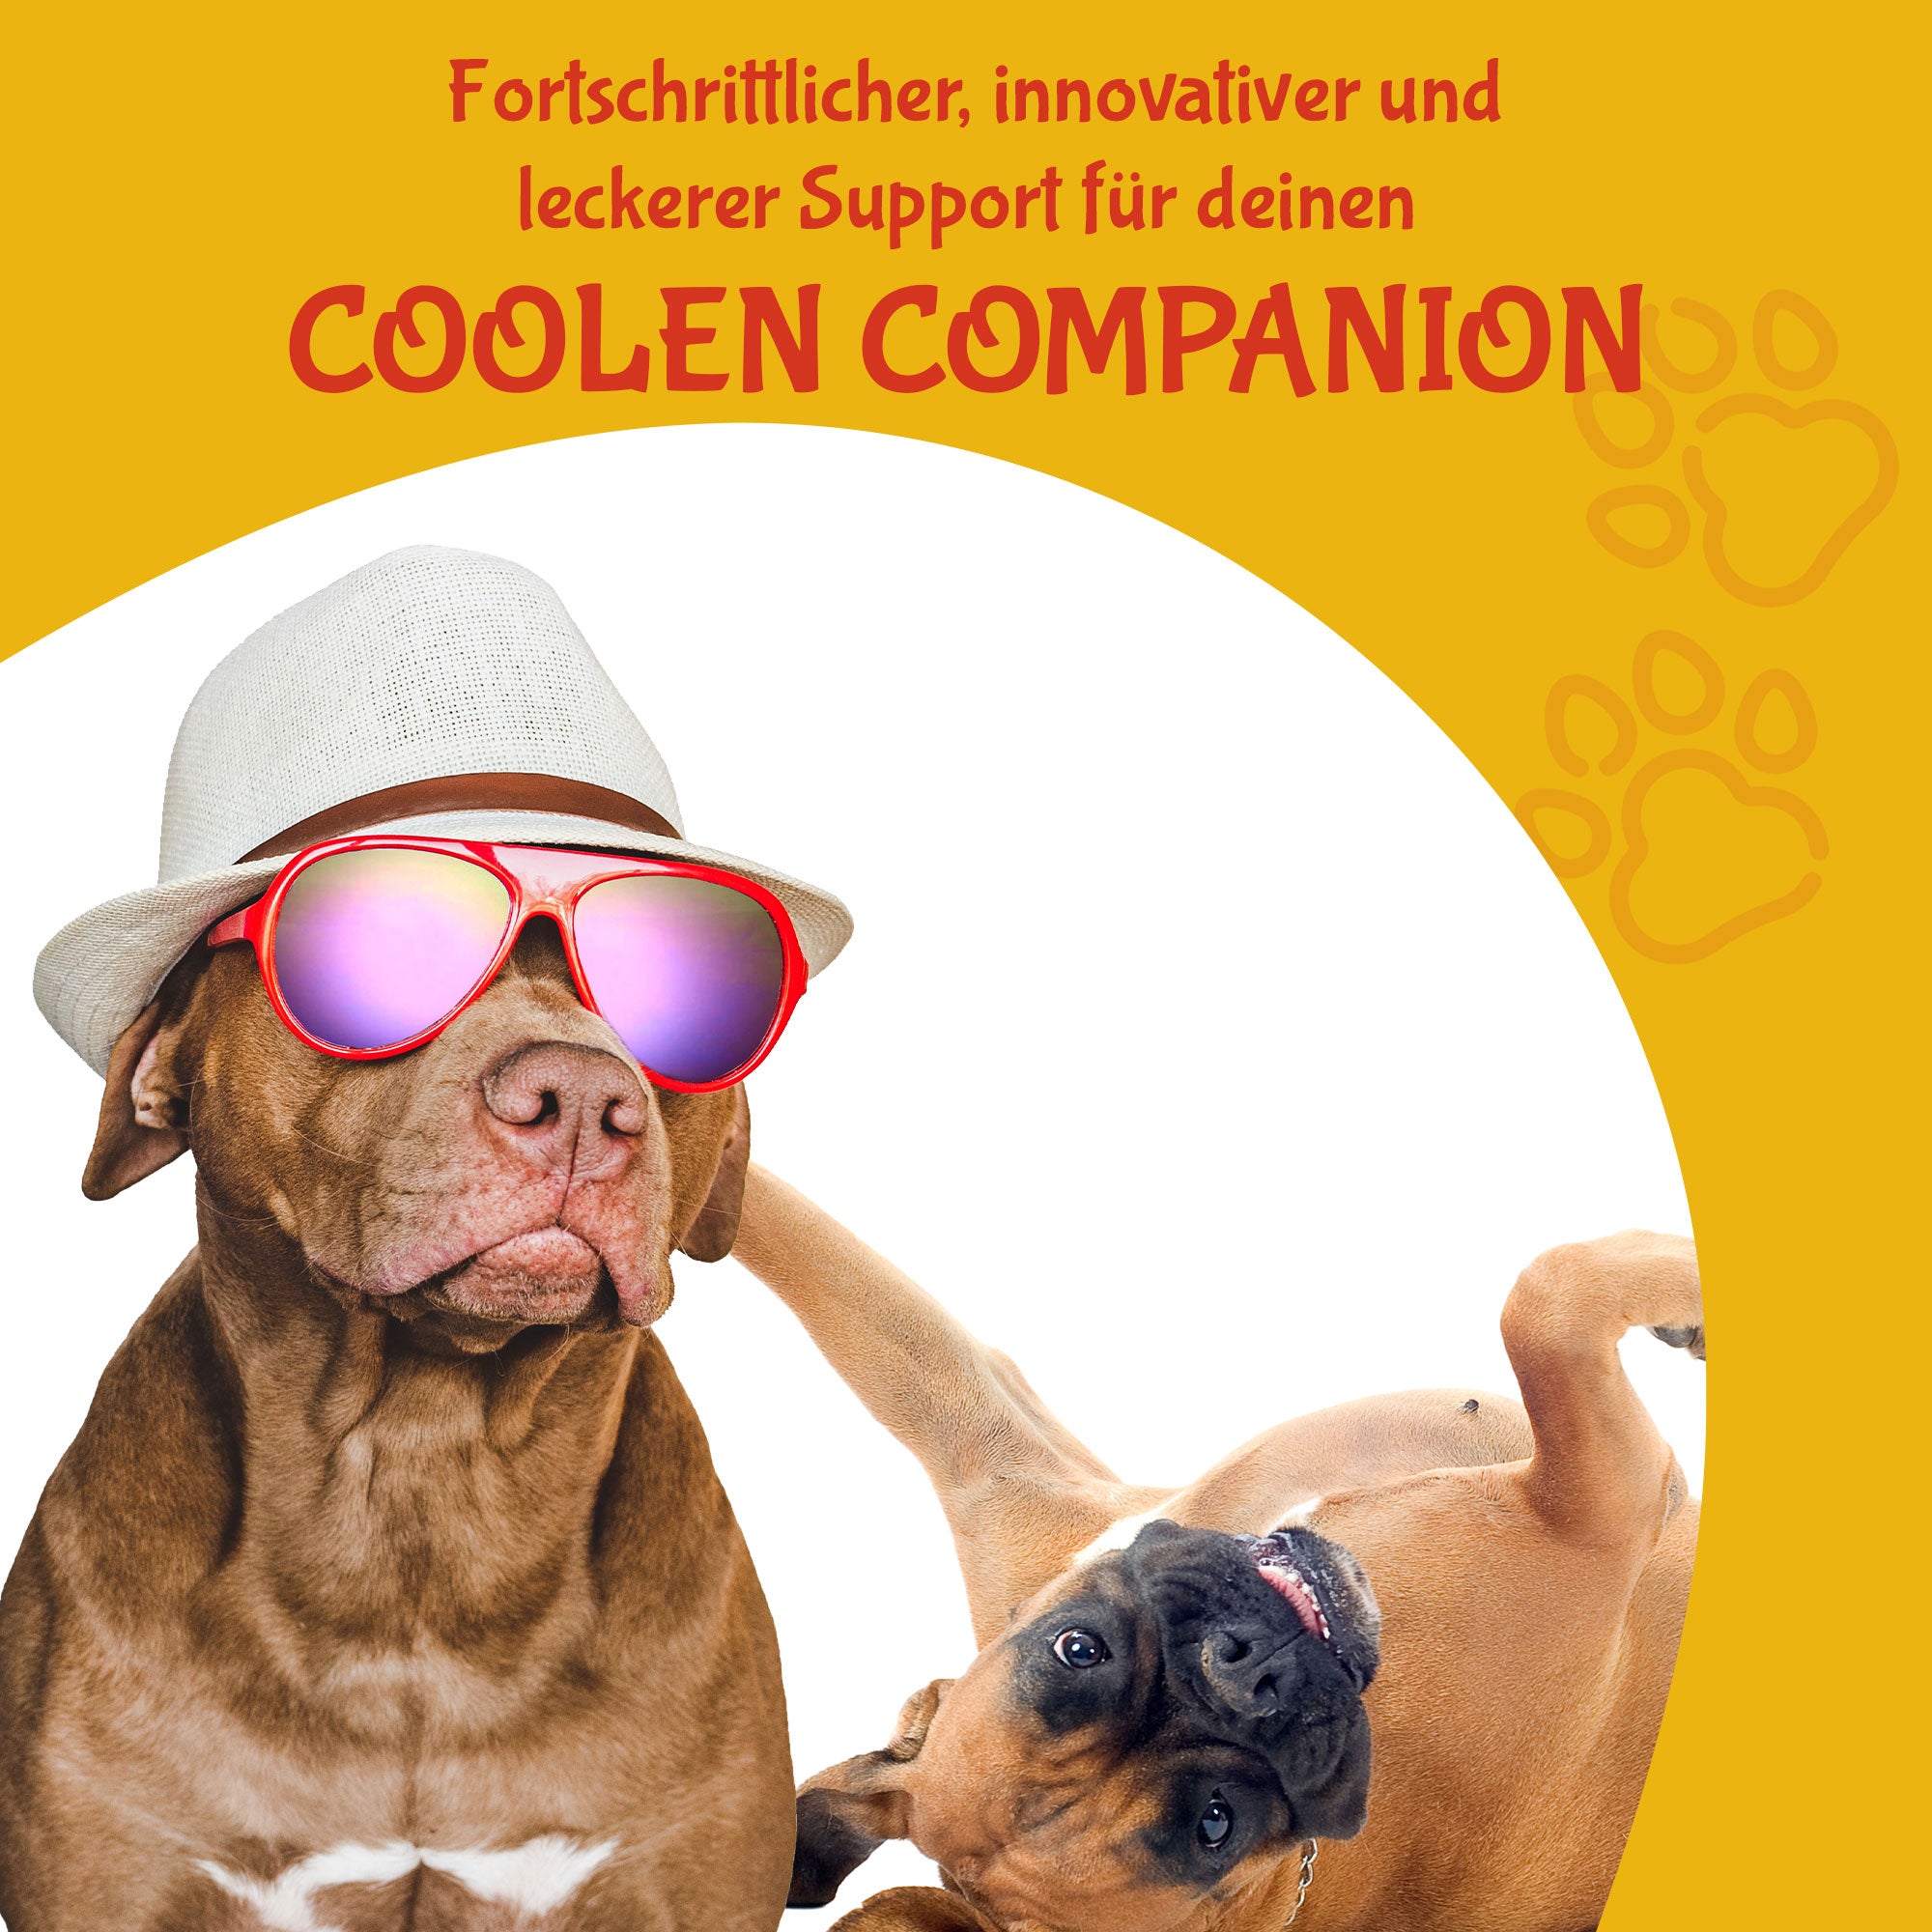 KRILL SOFTIEZ - funktionale Snacks für Hunde